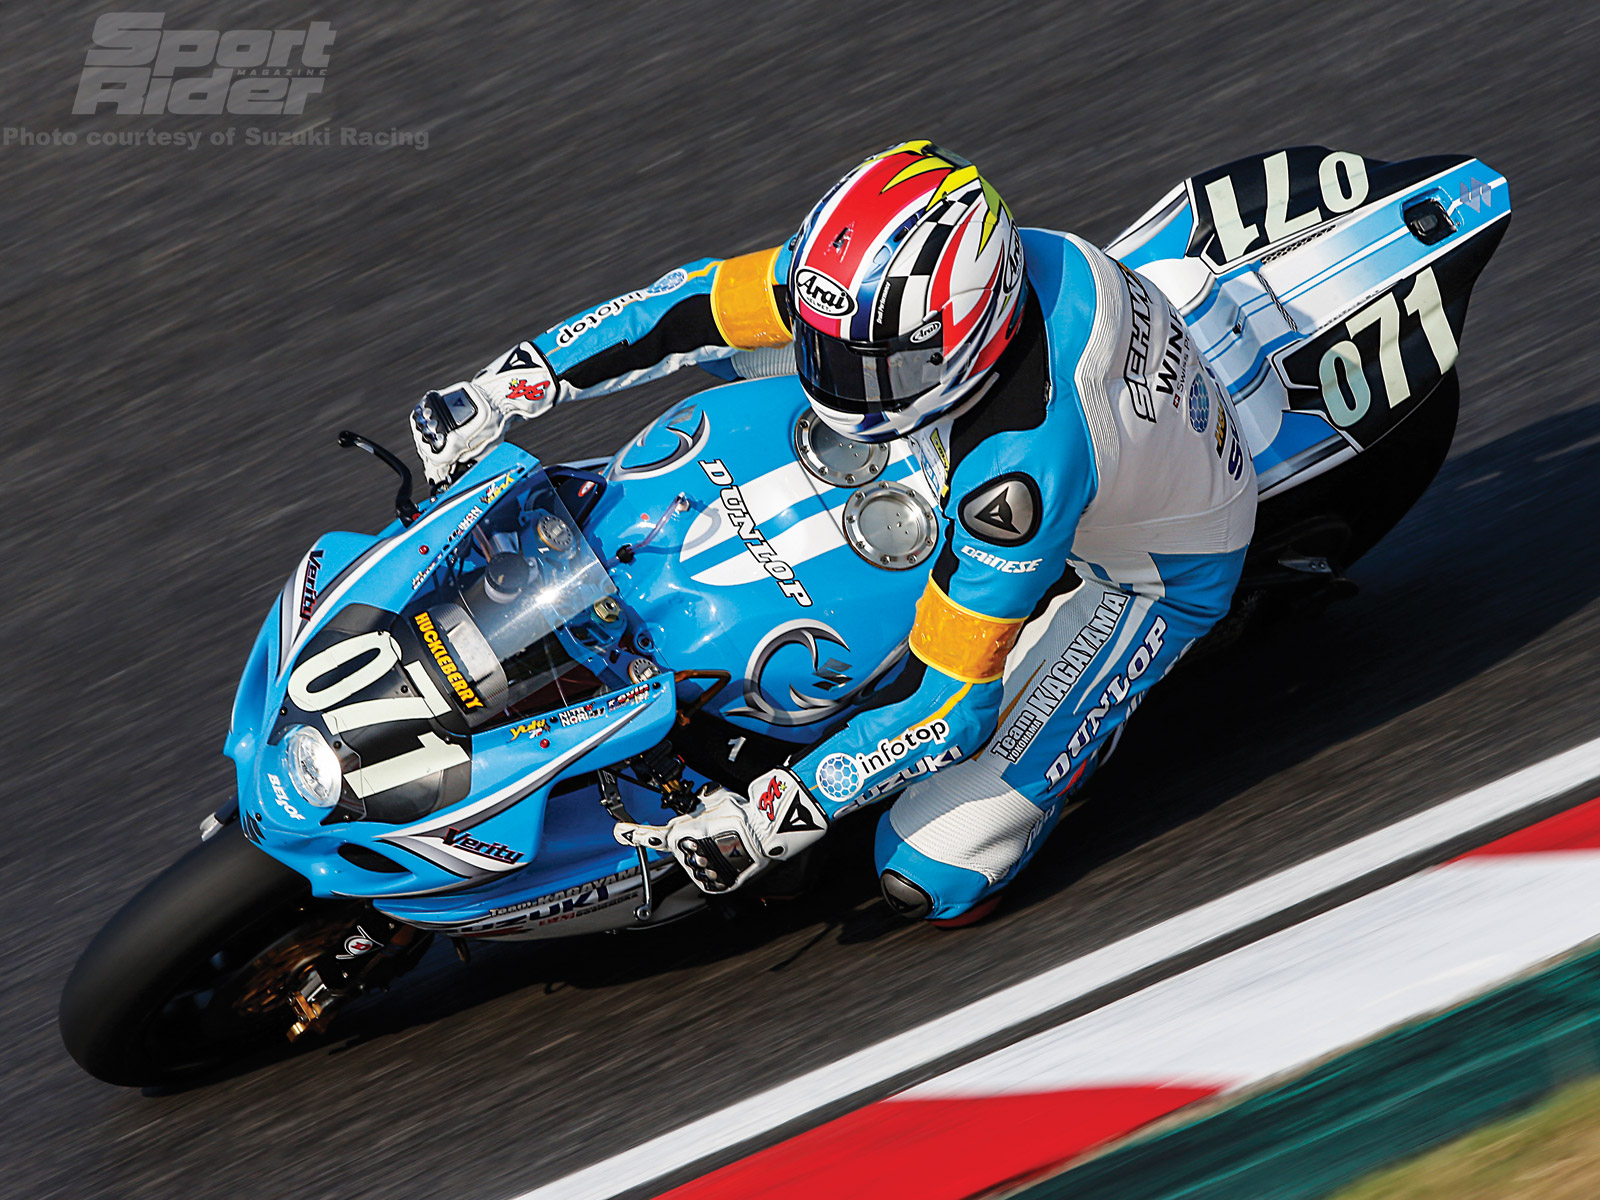 Kevin Schwantz Races the 2013 Suzuka 8 Hours